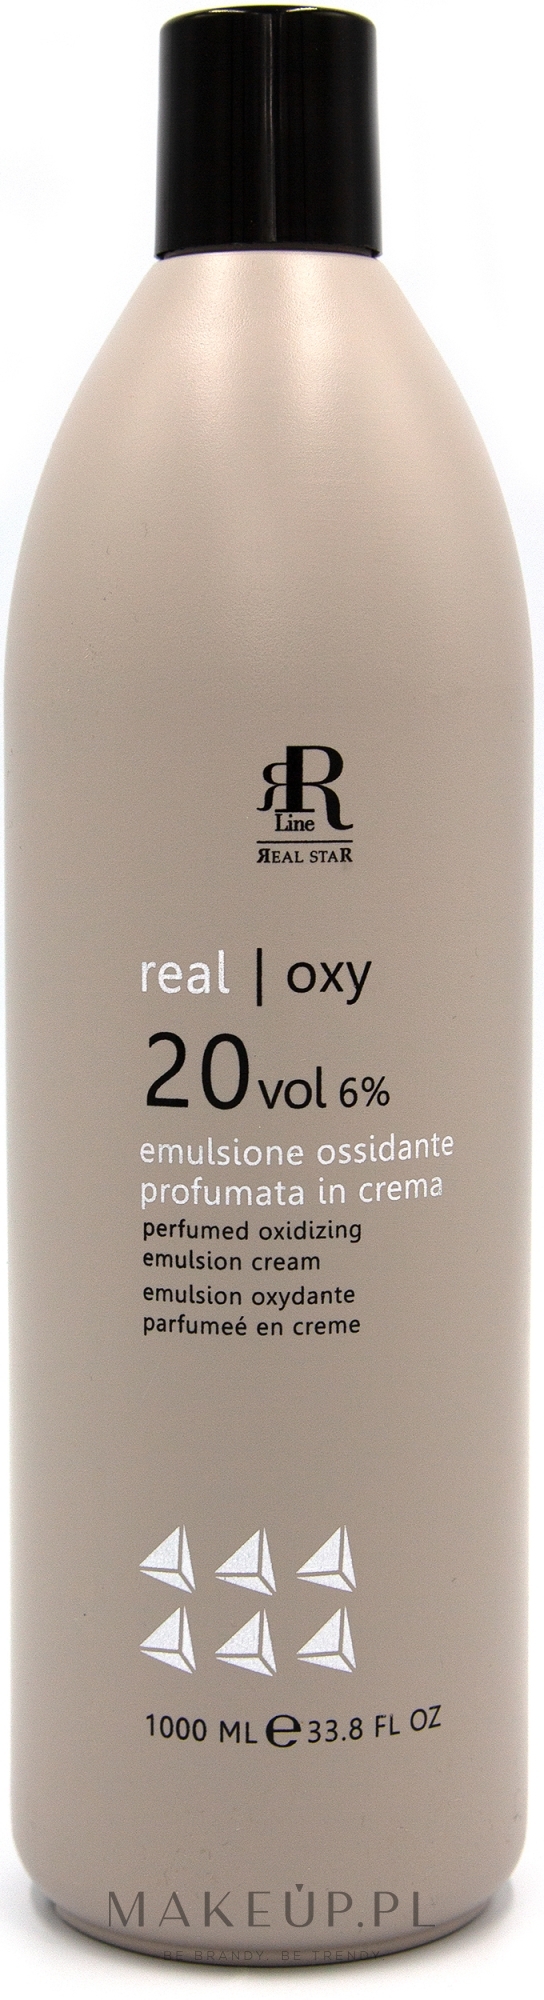 Perfumowana emulsja utleniająca 6% - RR Line Parfymed Ossidante Emulsione Cream 6% 20 Vol — Zdjęcie 1000 ml